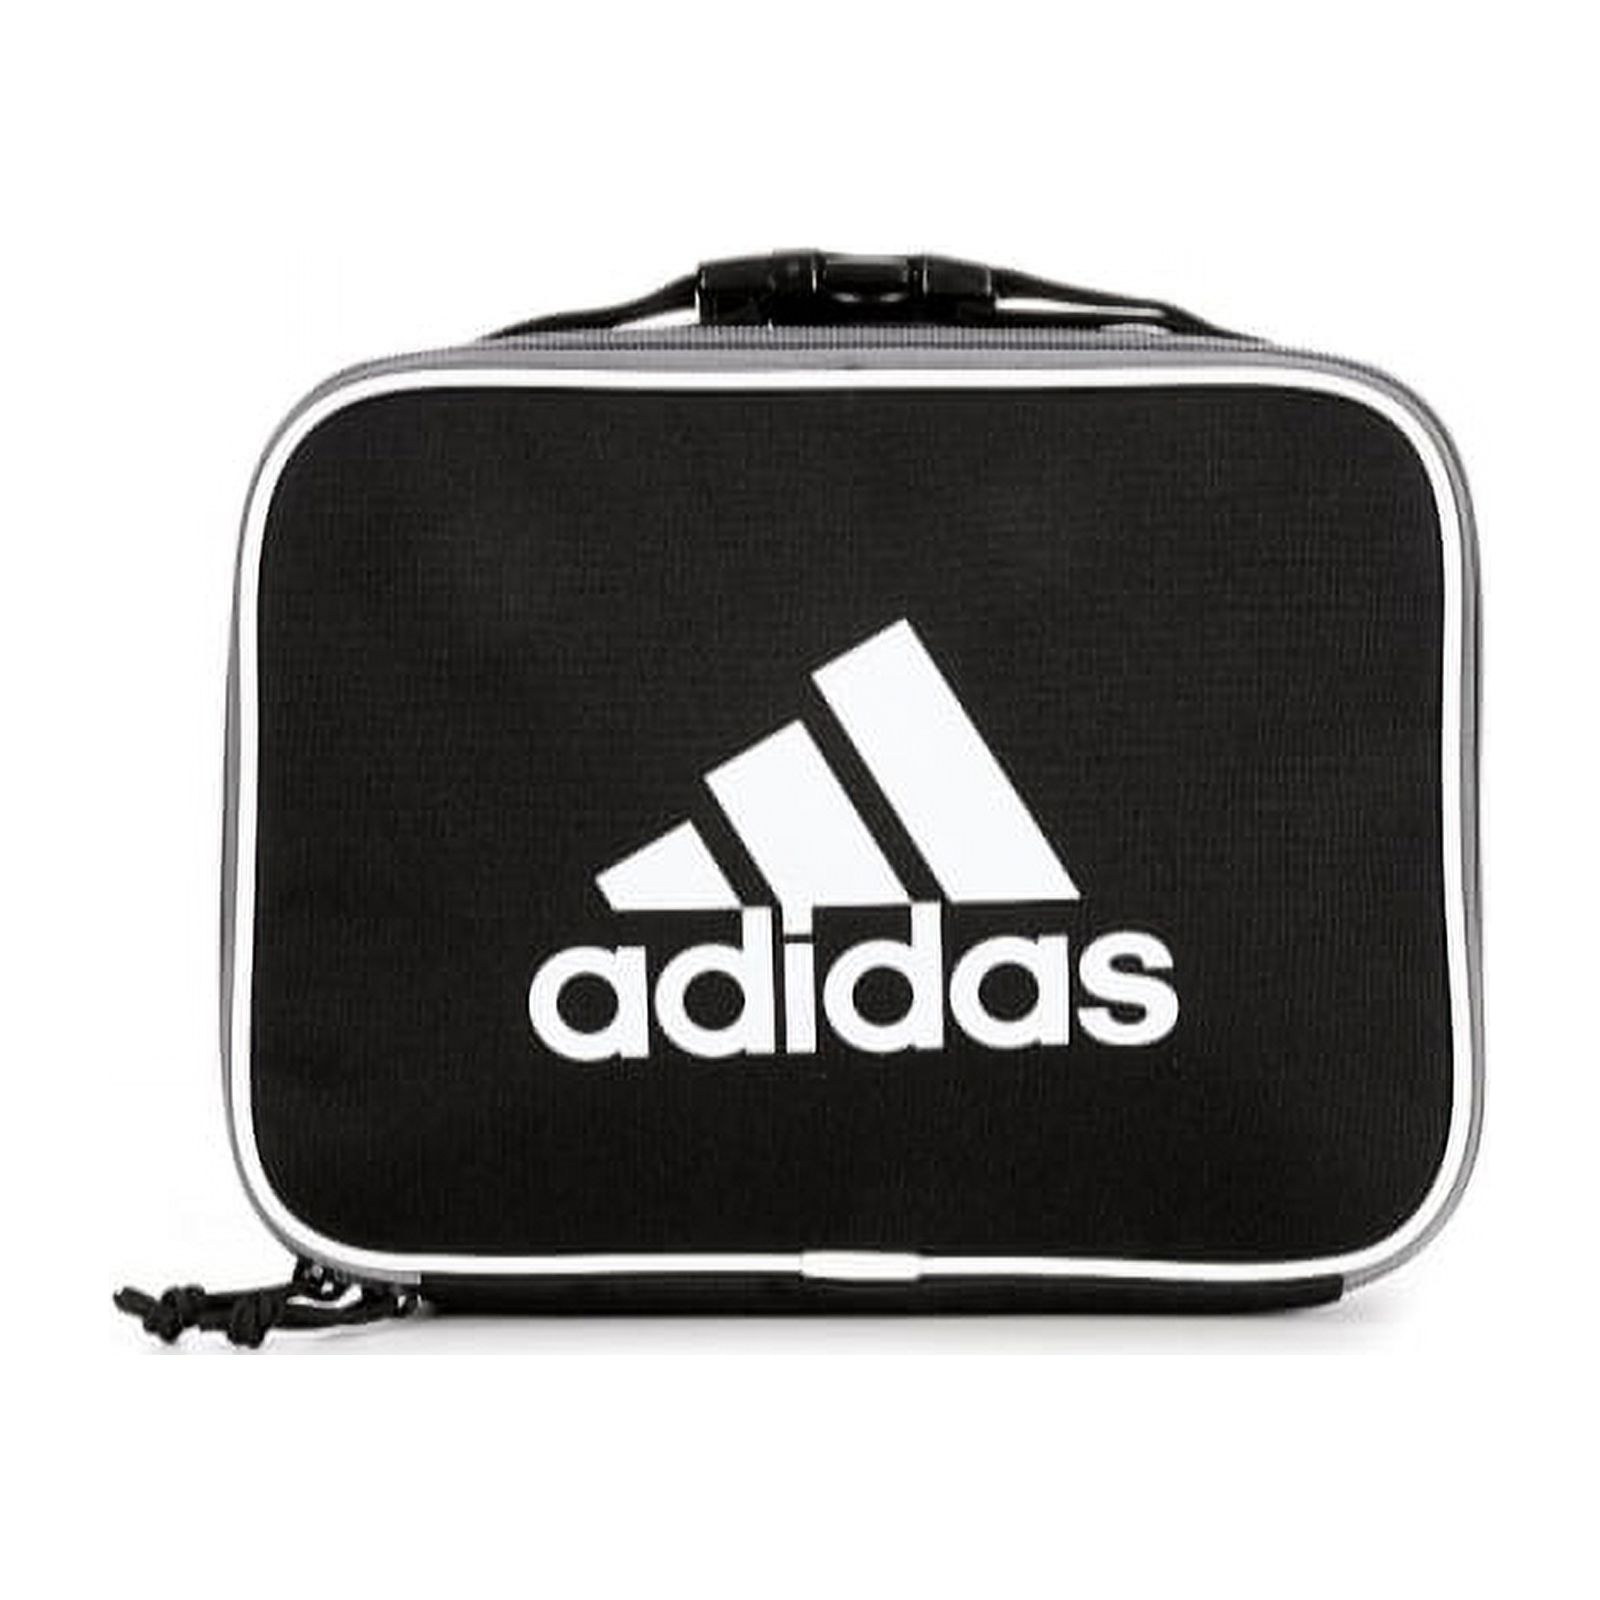 adidas Foundation Lunch Bag, Black/White, One Size - image 1 of 5